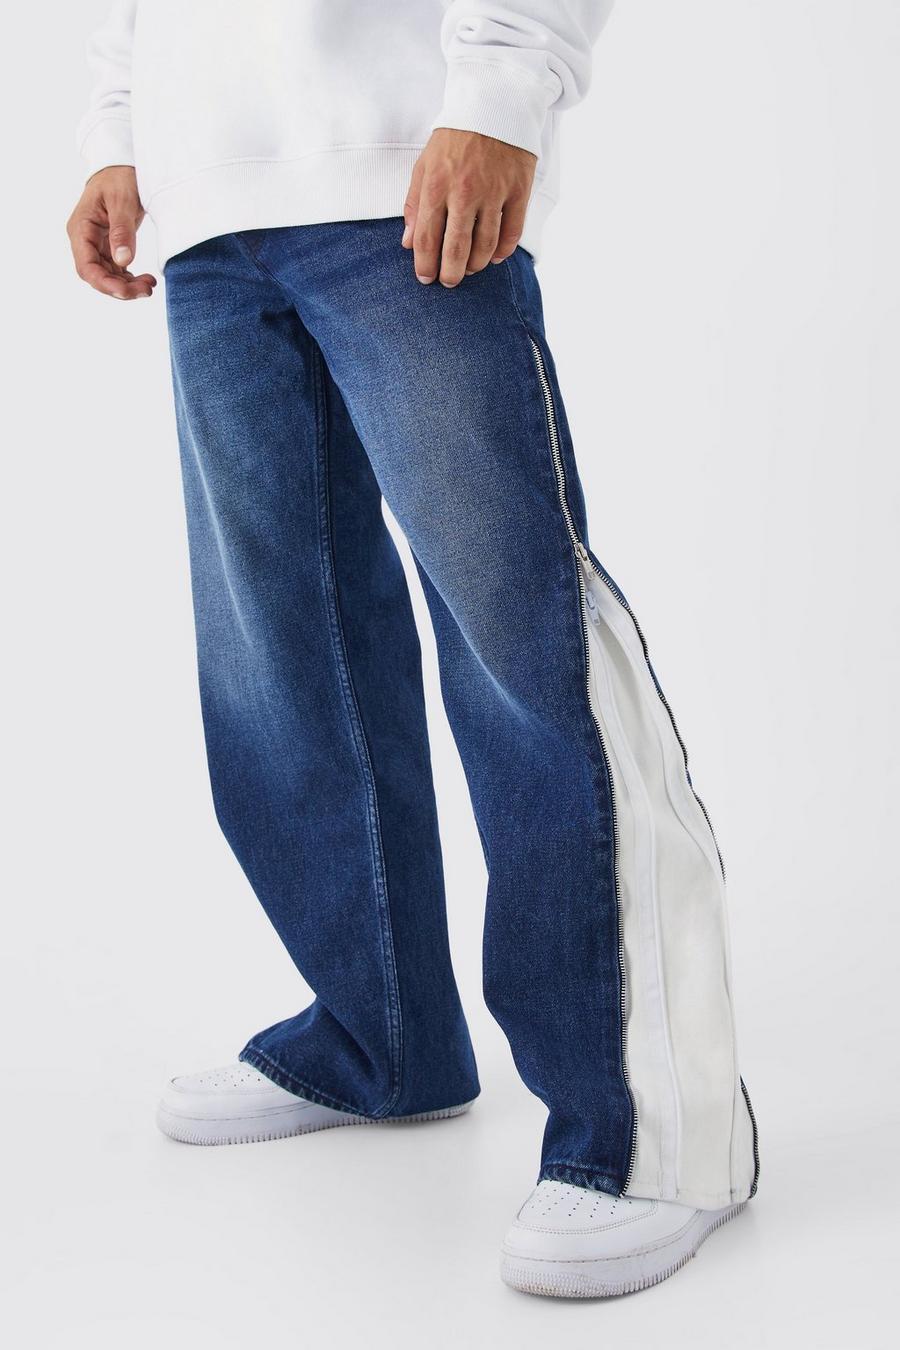 Jeans rilassati con zip multiple a contrasto, Indigo